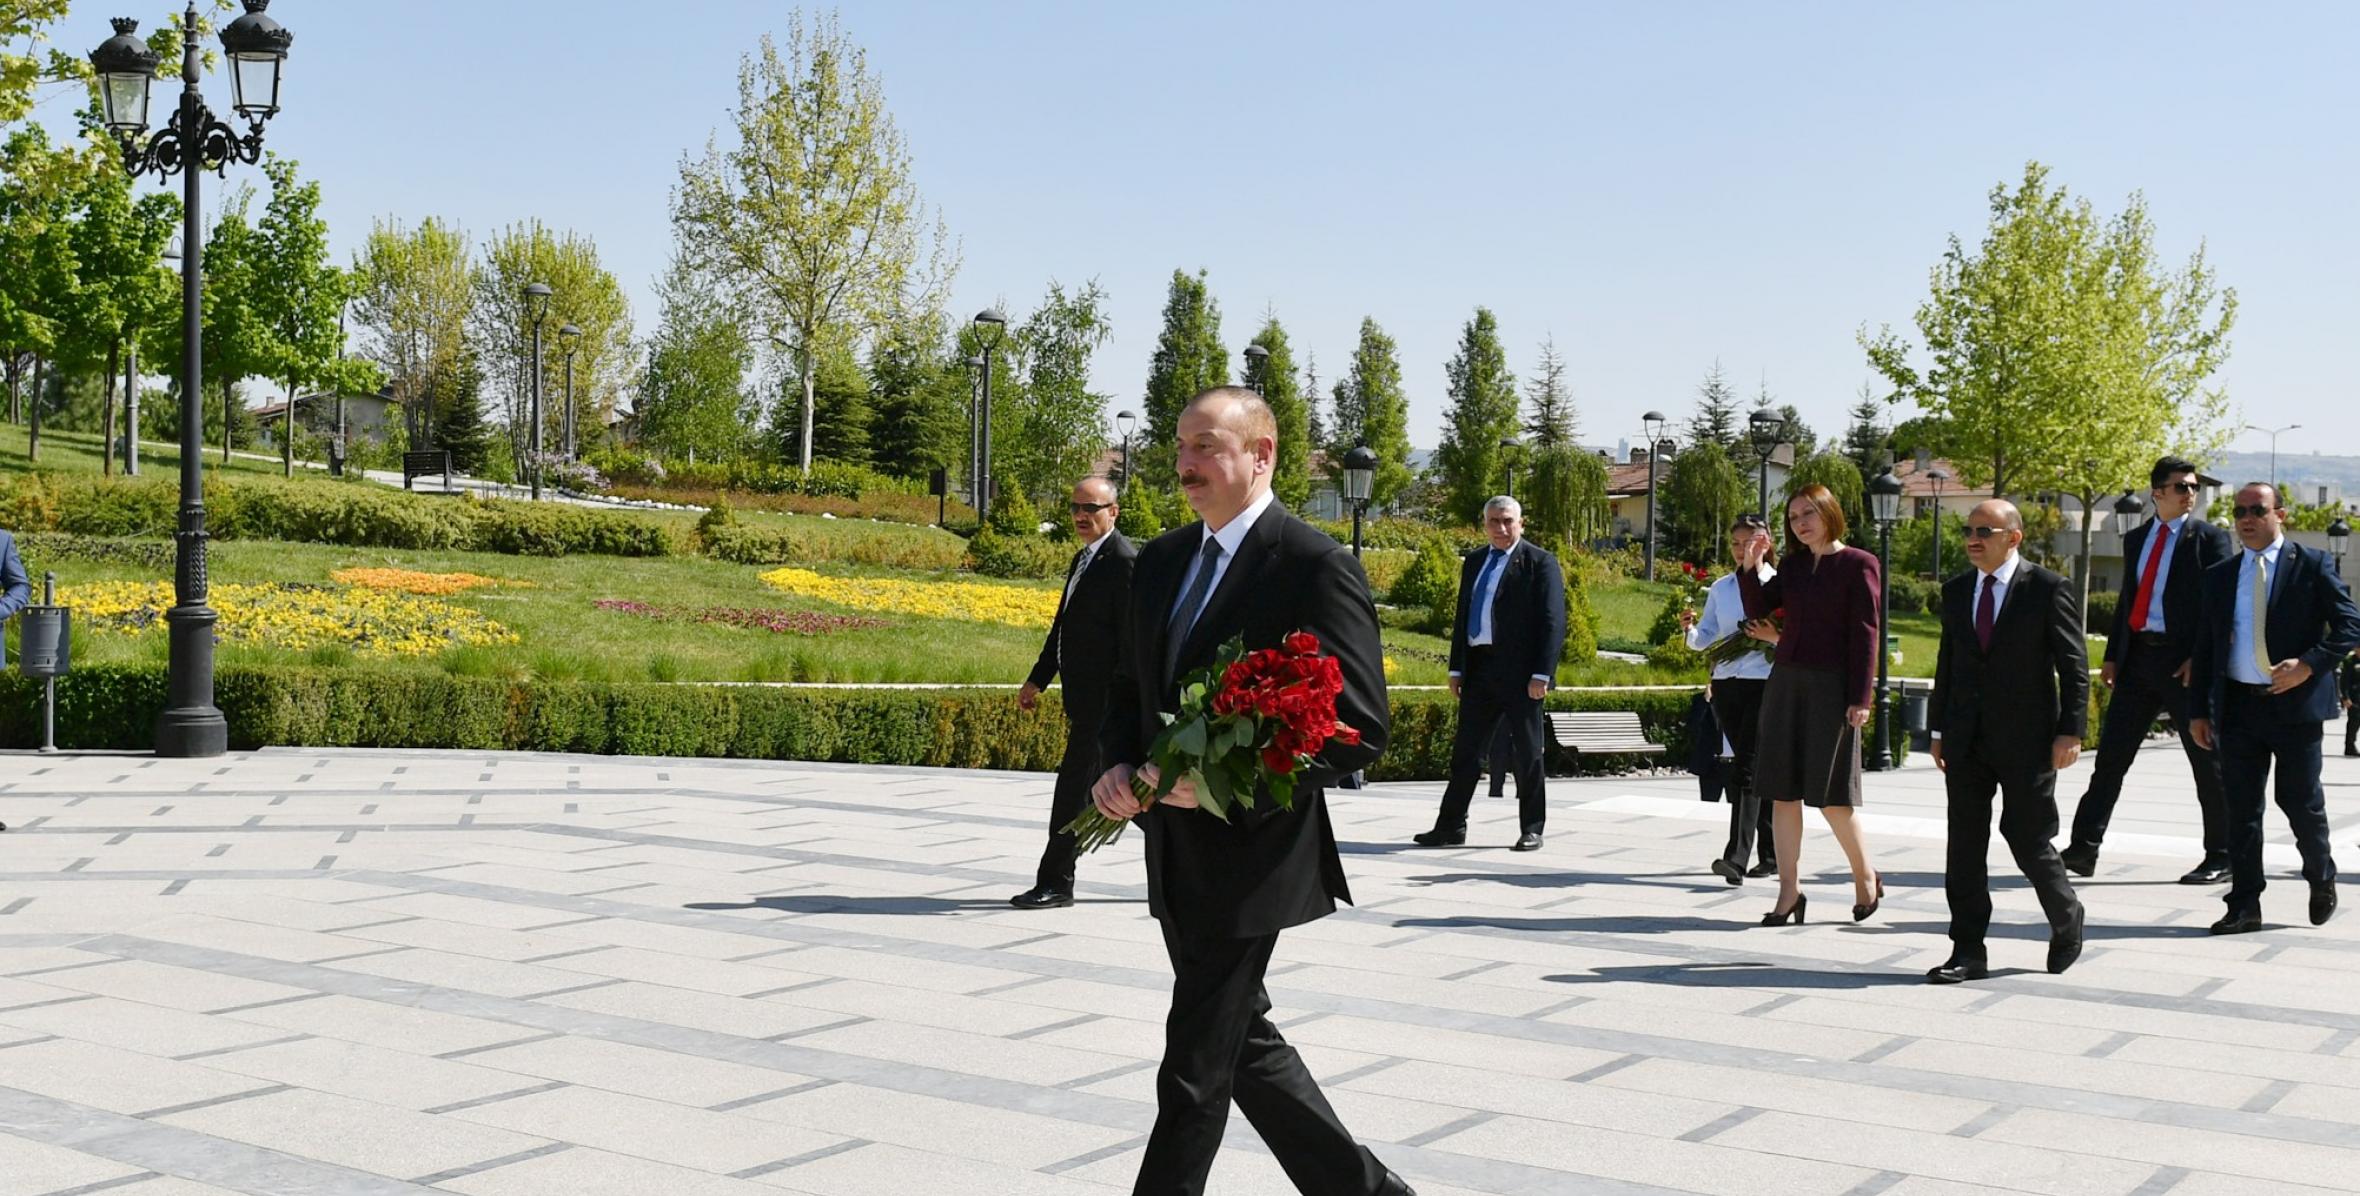 Ilham Aliyev visited Heydar Aliyev Park in Ankara